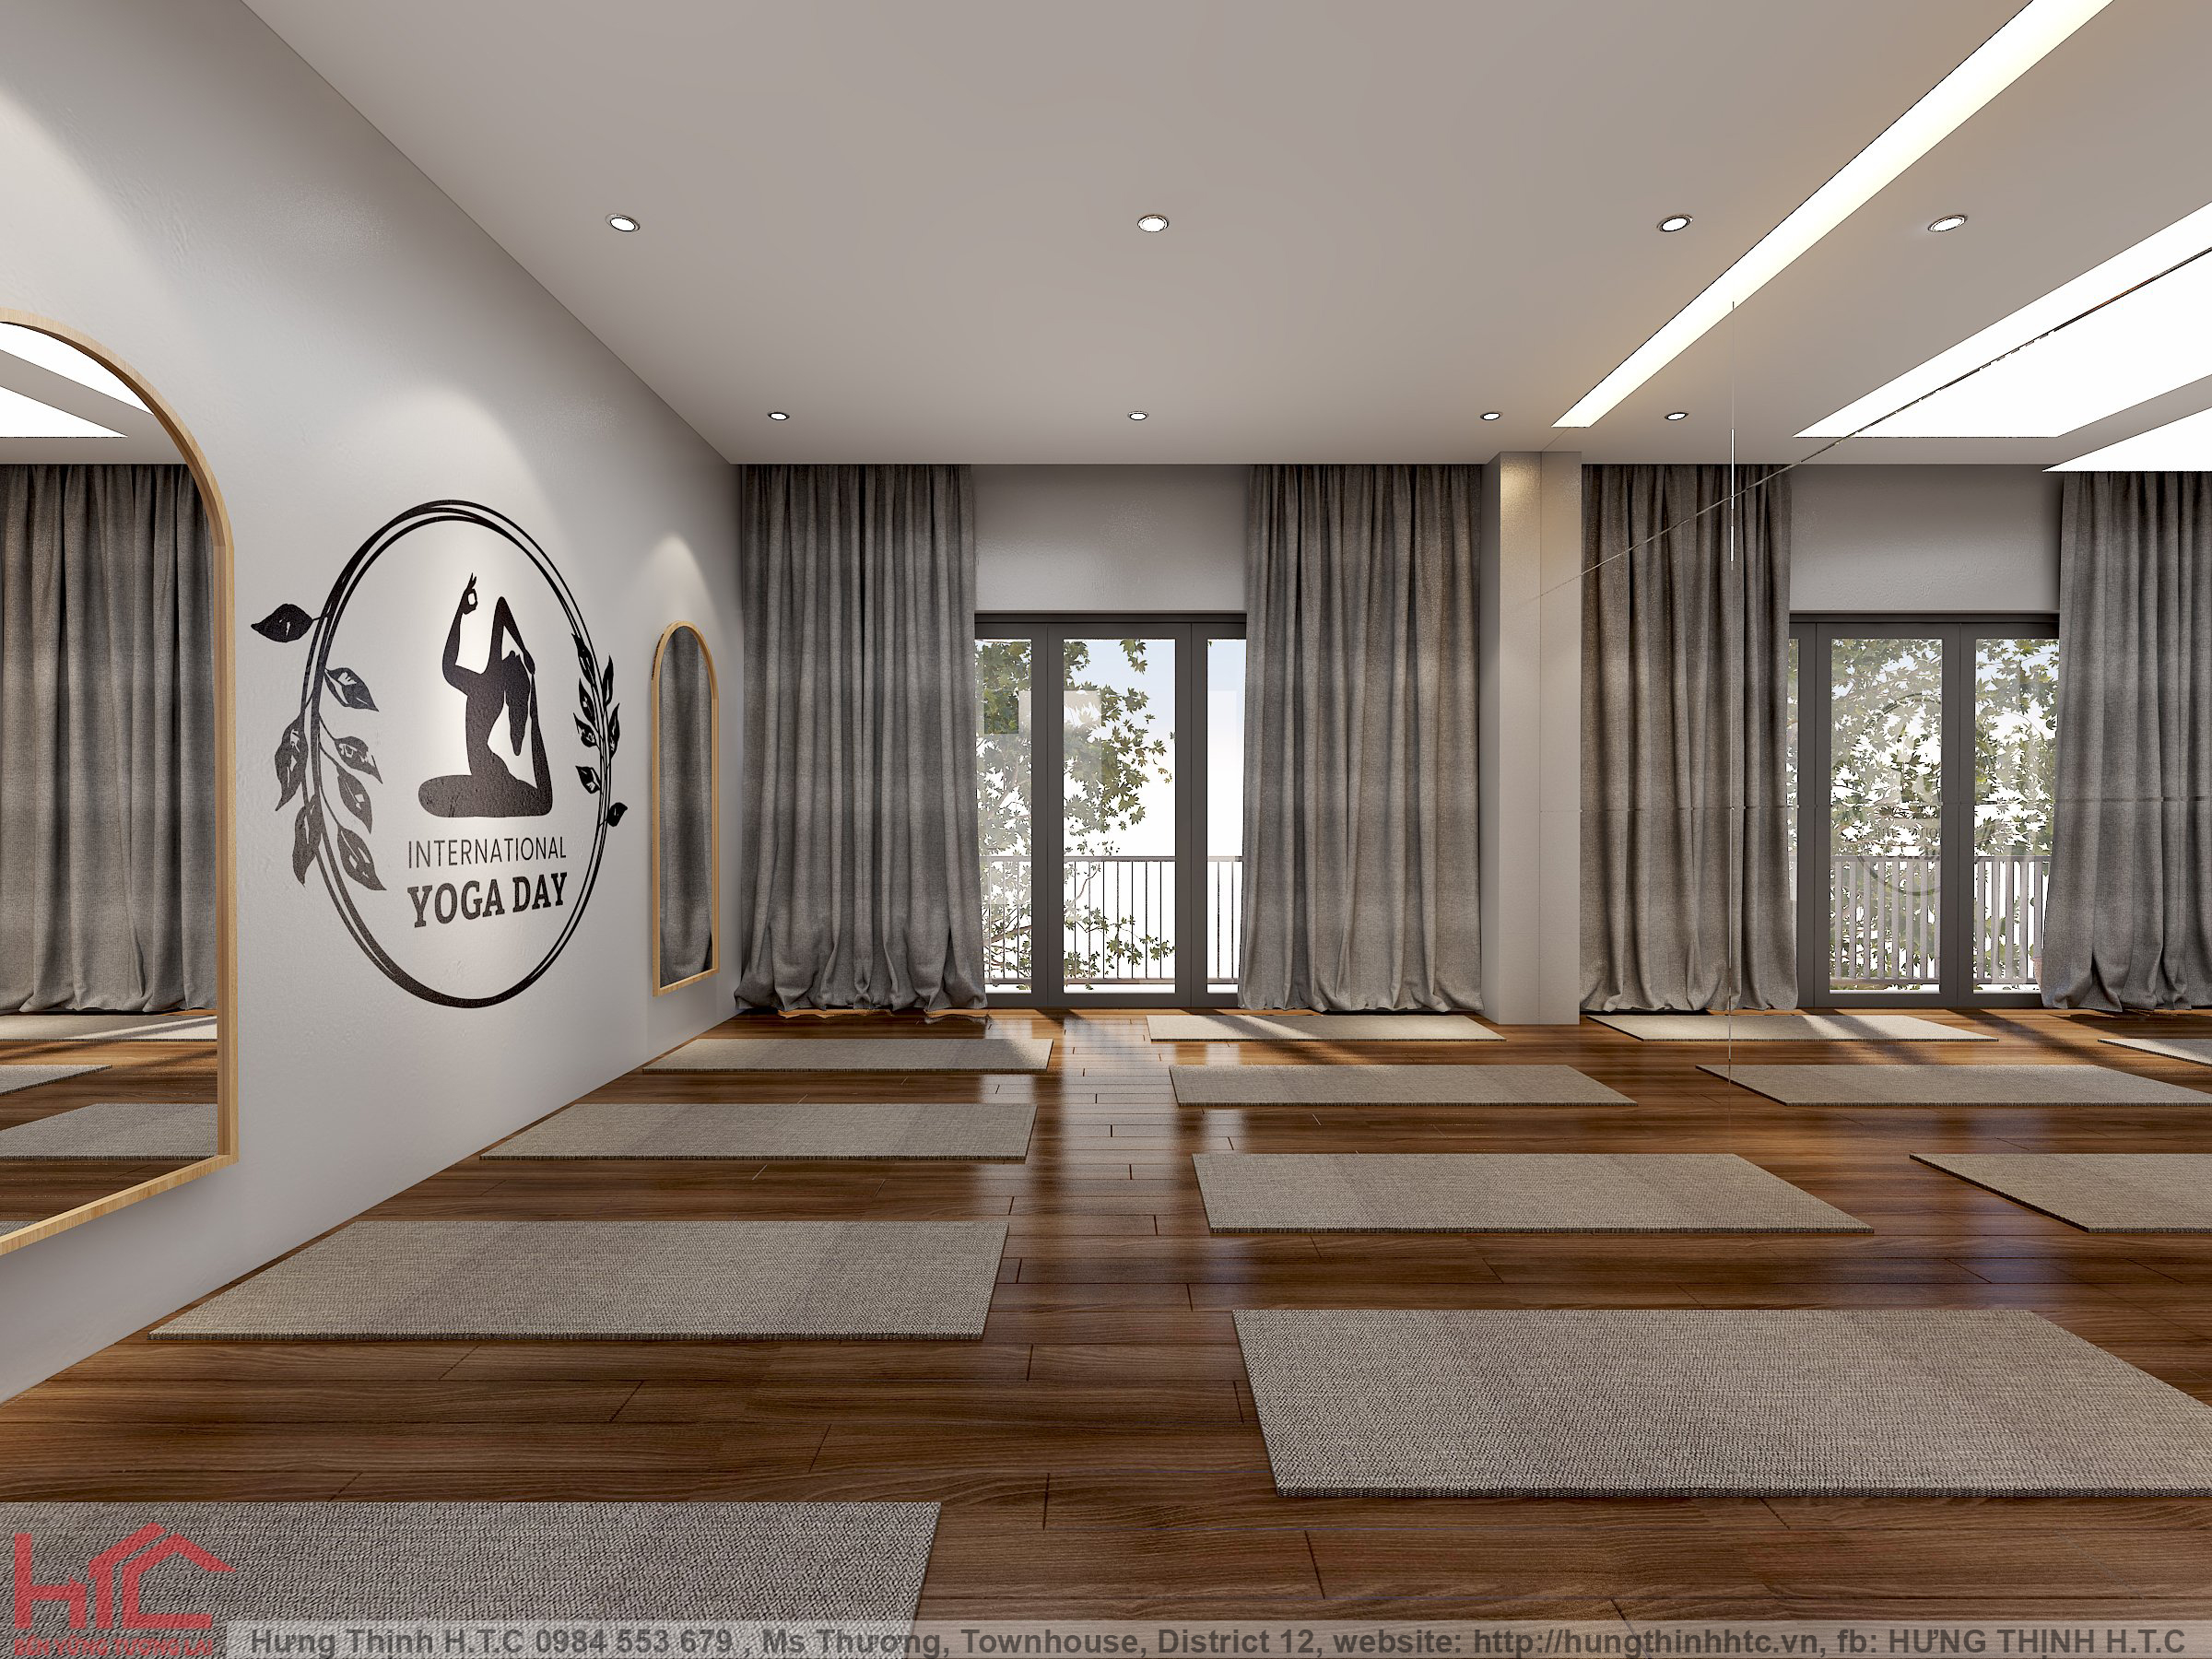 Yoga room 02